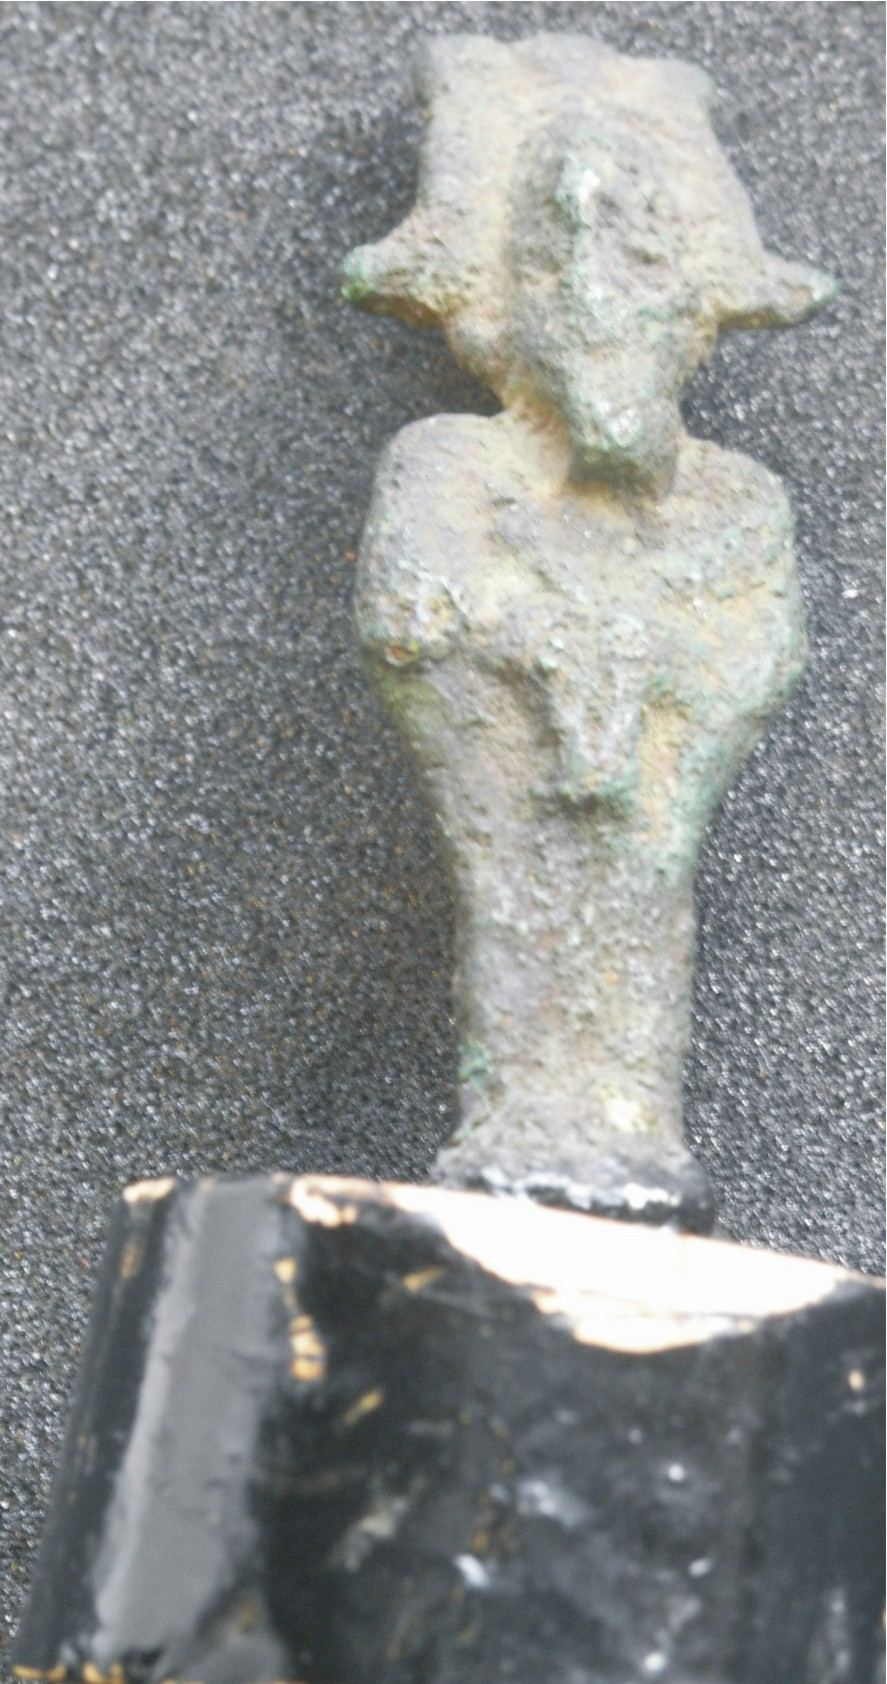 Image for: Osiris figure